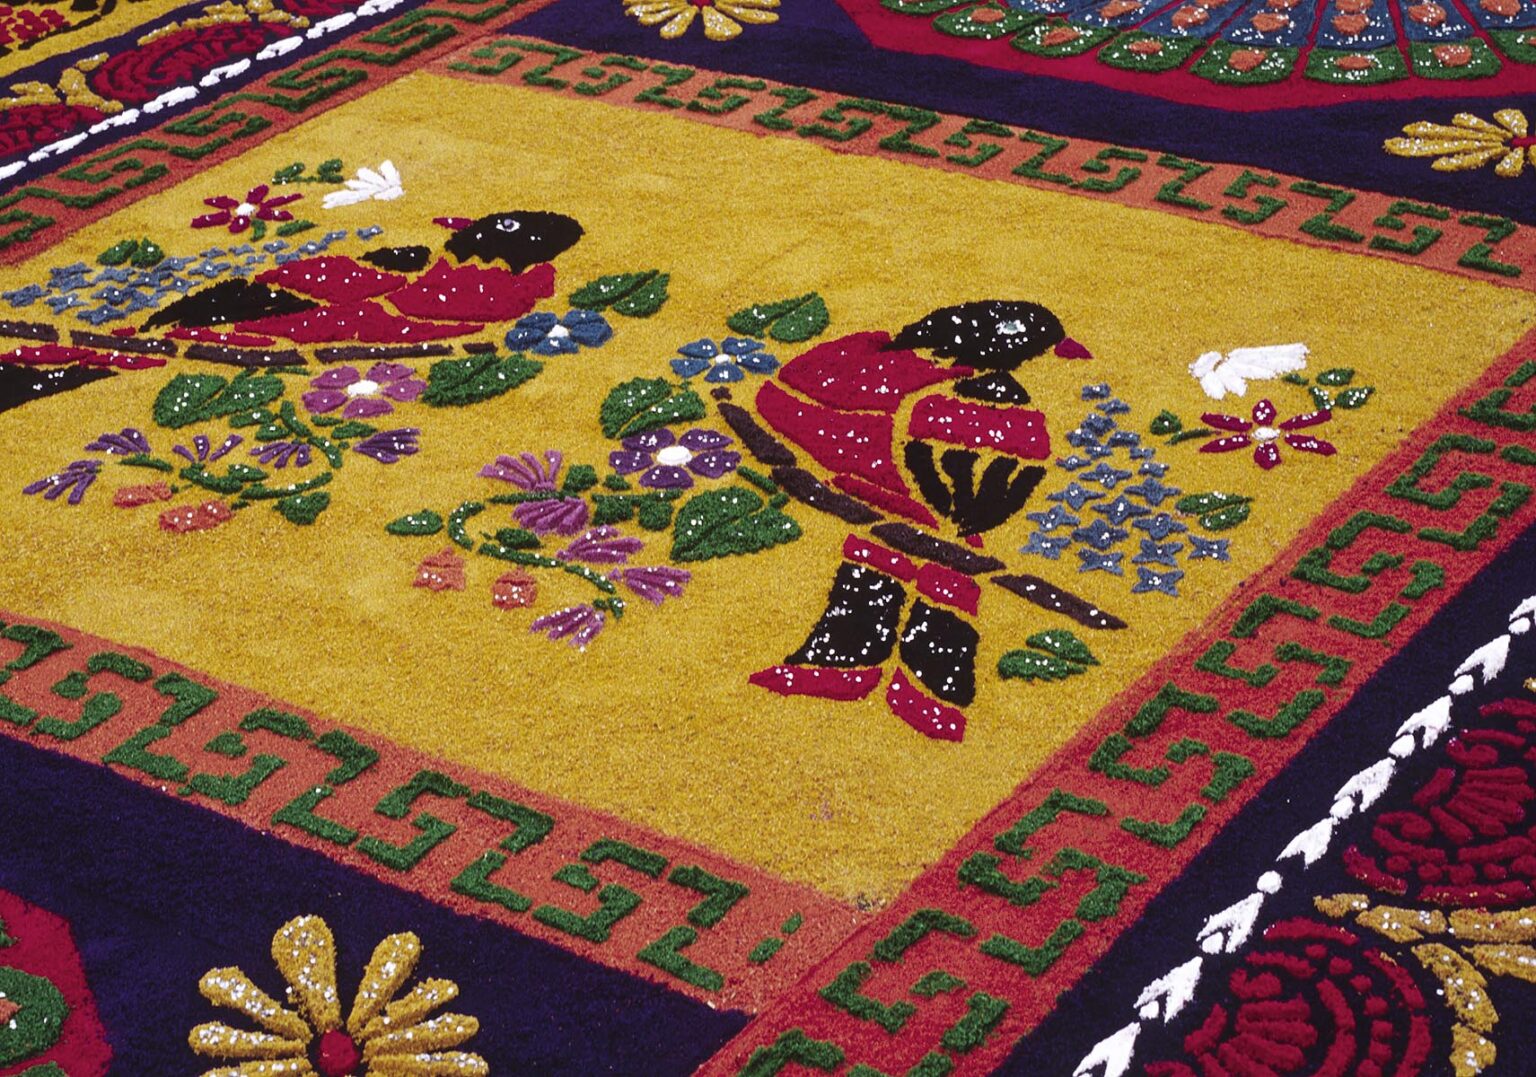 ALFOMBRA (carpet) with CATHOLIC symbolism and MAYAN imagery during GOOD FRIDAY procession - ANTIGUA, GUATEMALA